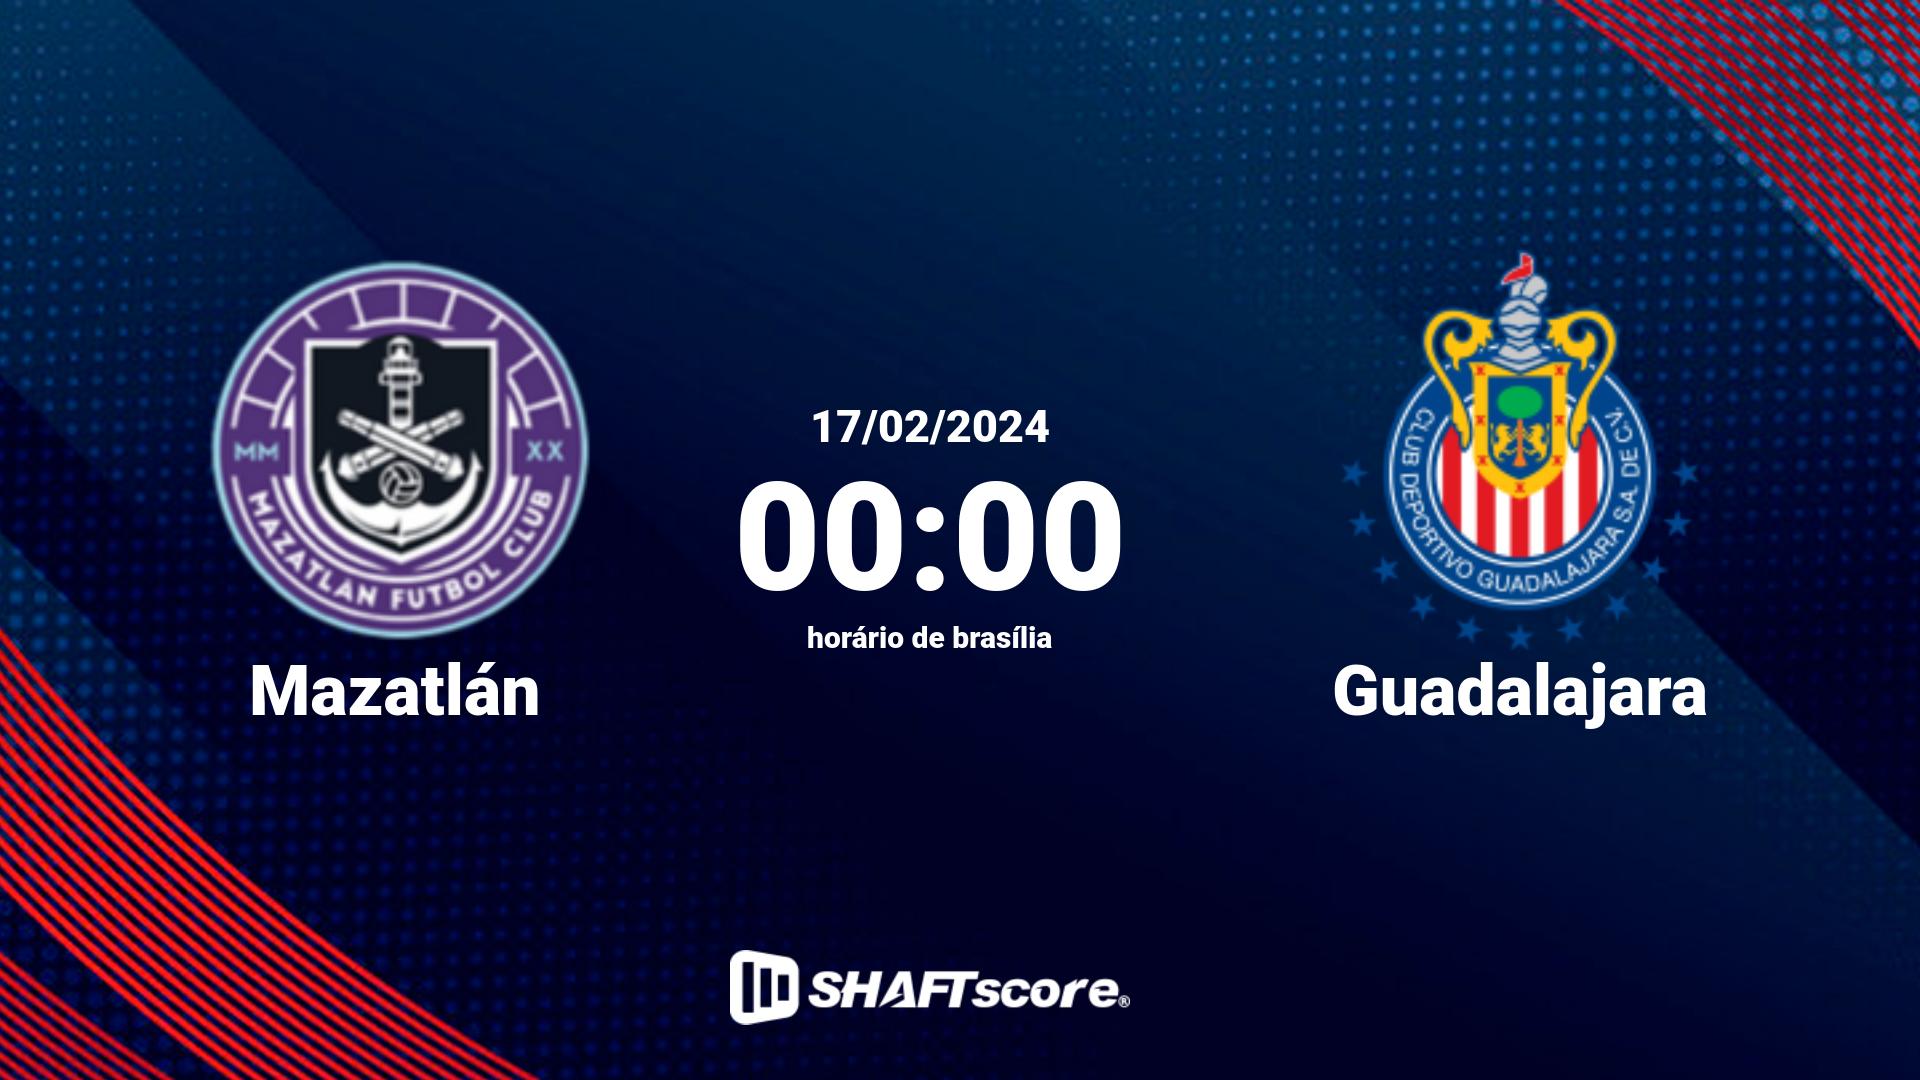 Estatísticas do jogo Mazatlán vs Guadalajara 17.02 00:00